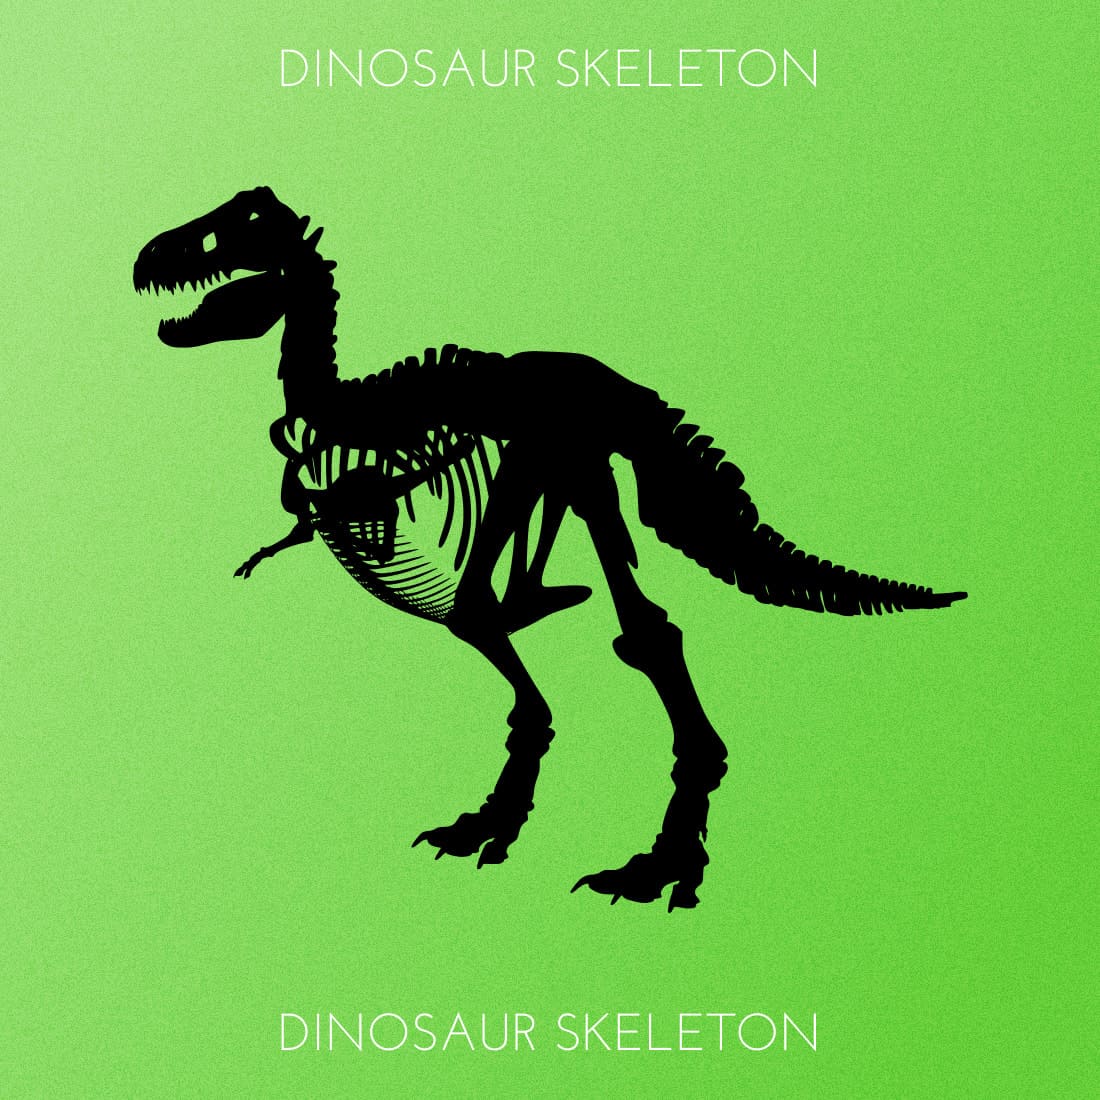 Dinosaur Skeleton - Green Colorful Image.